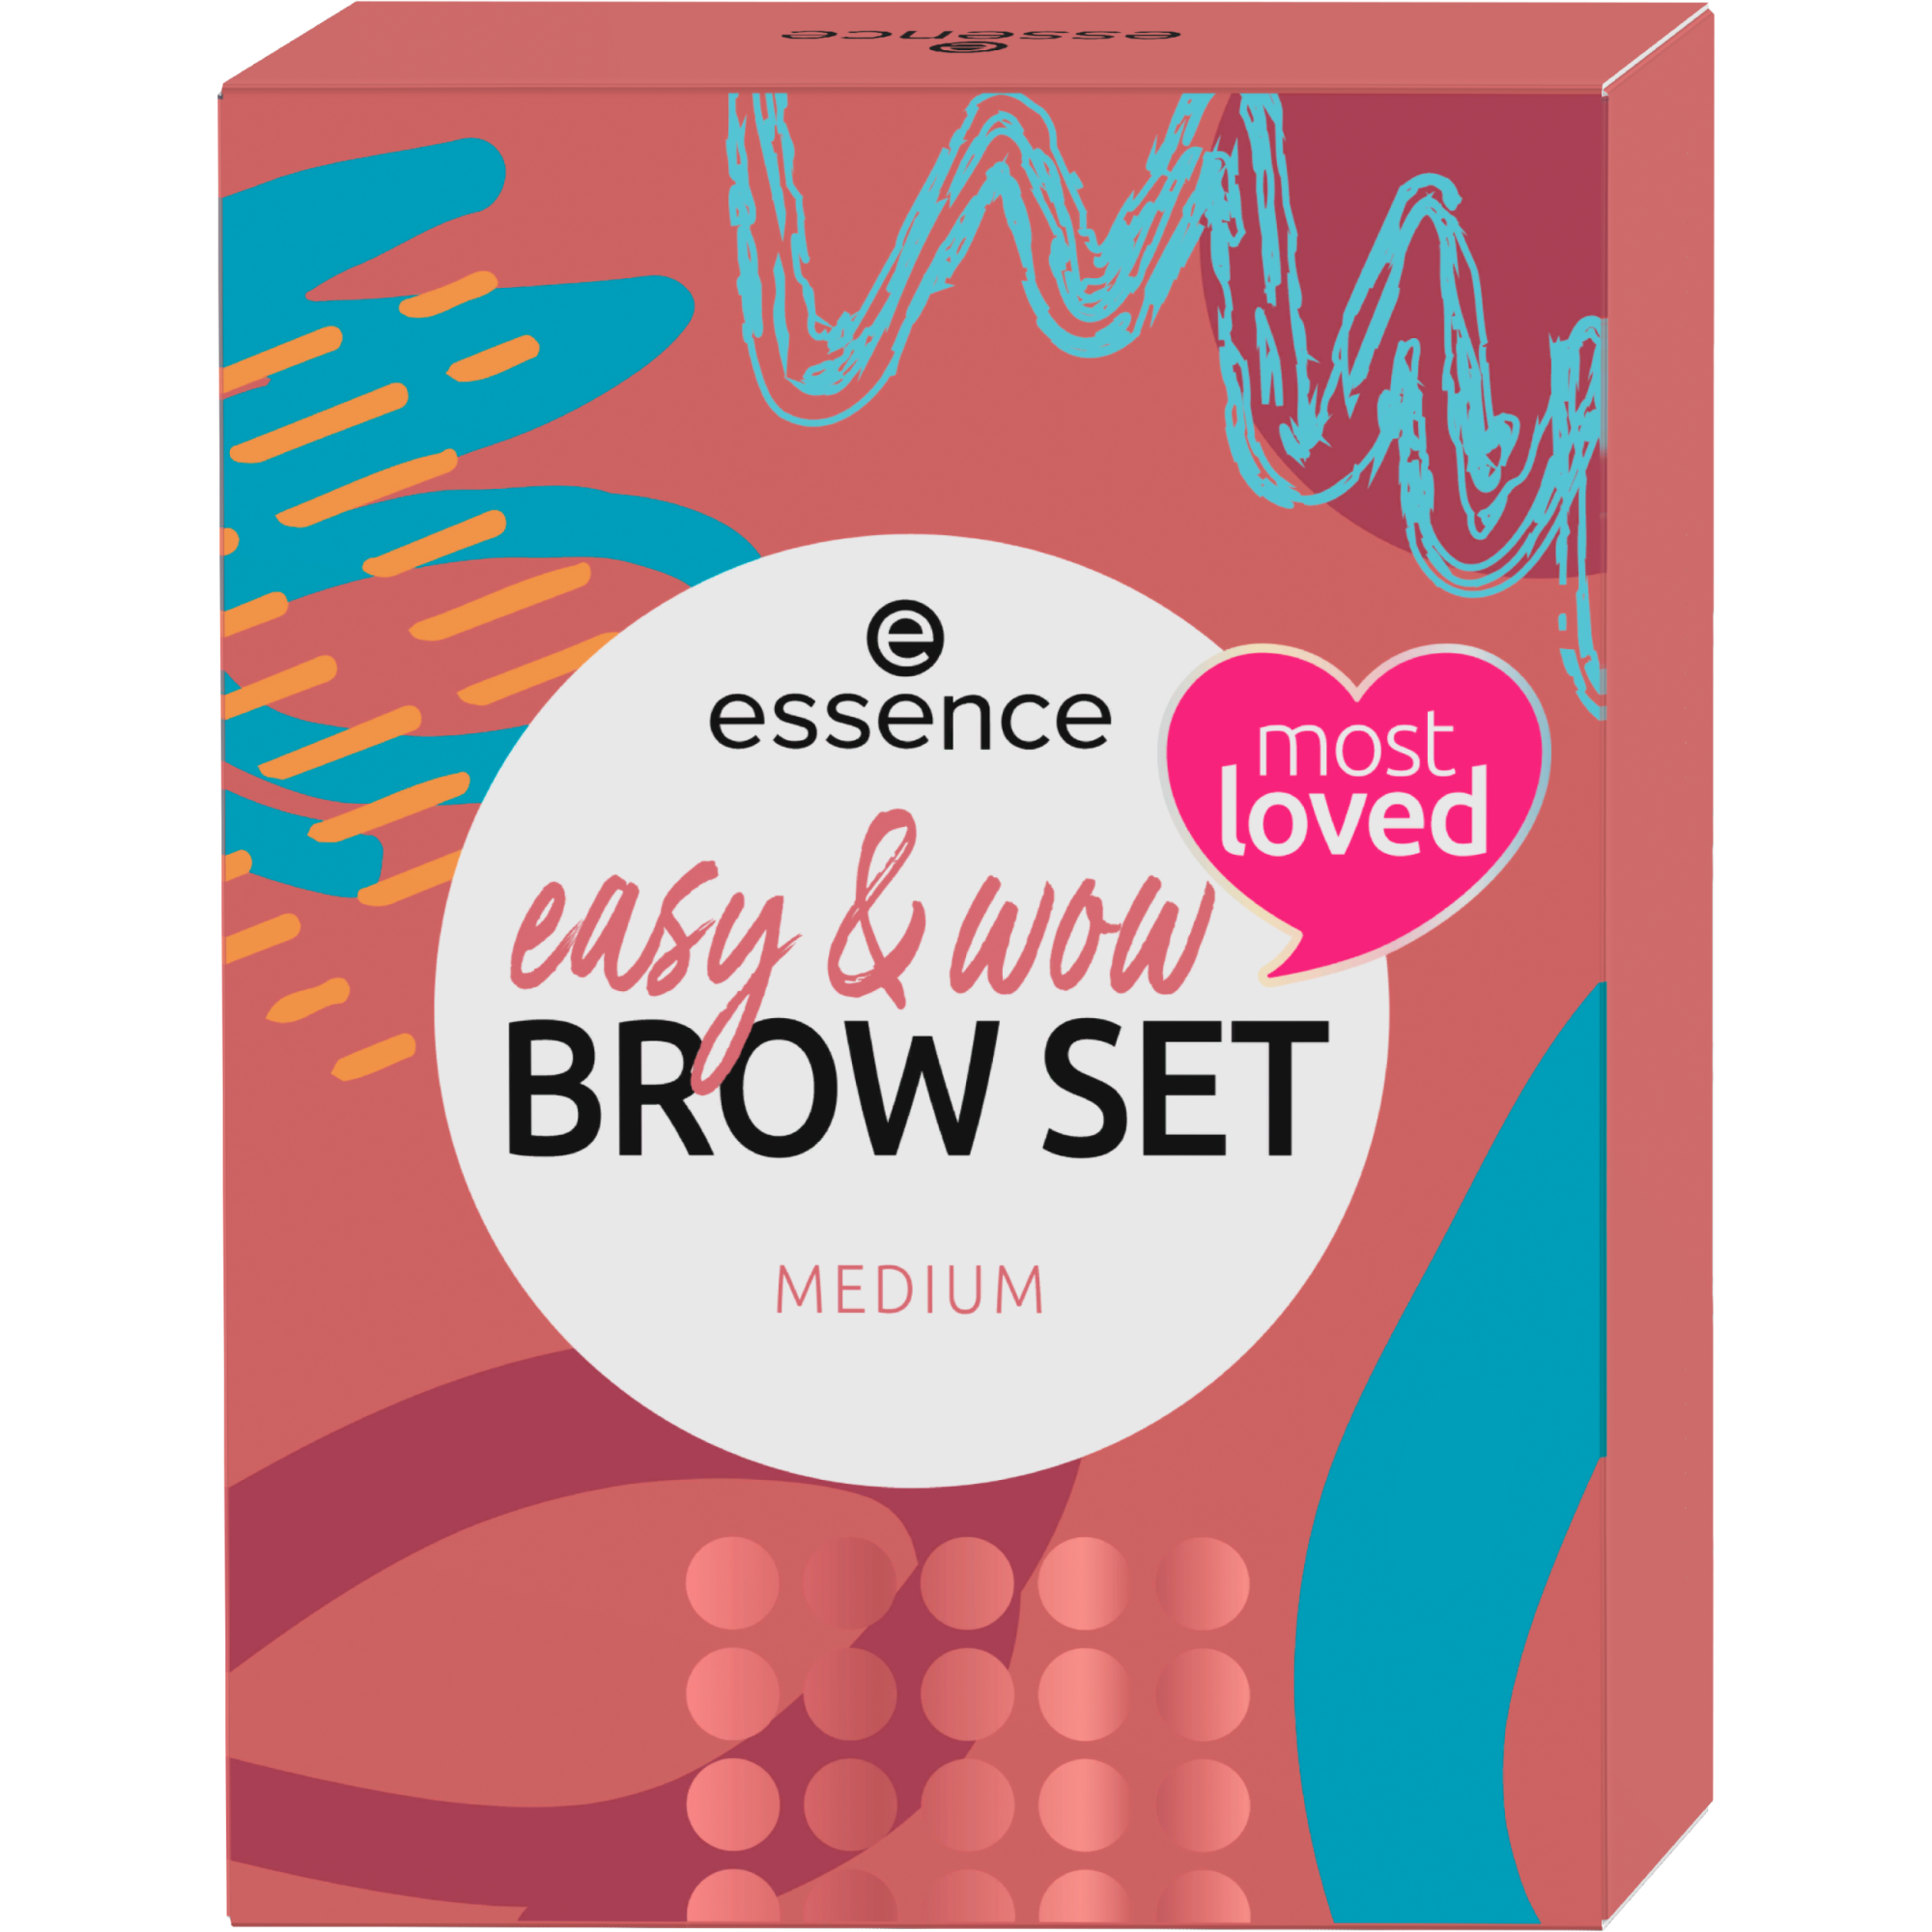 easy & WOW brow set medium coffret sourcils